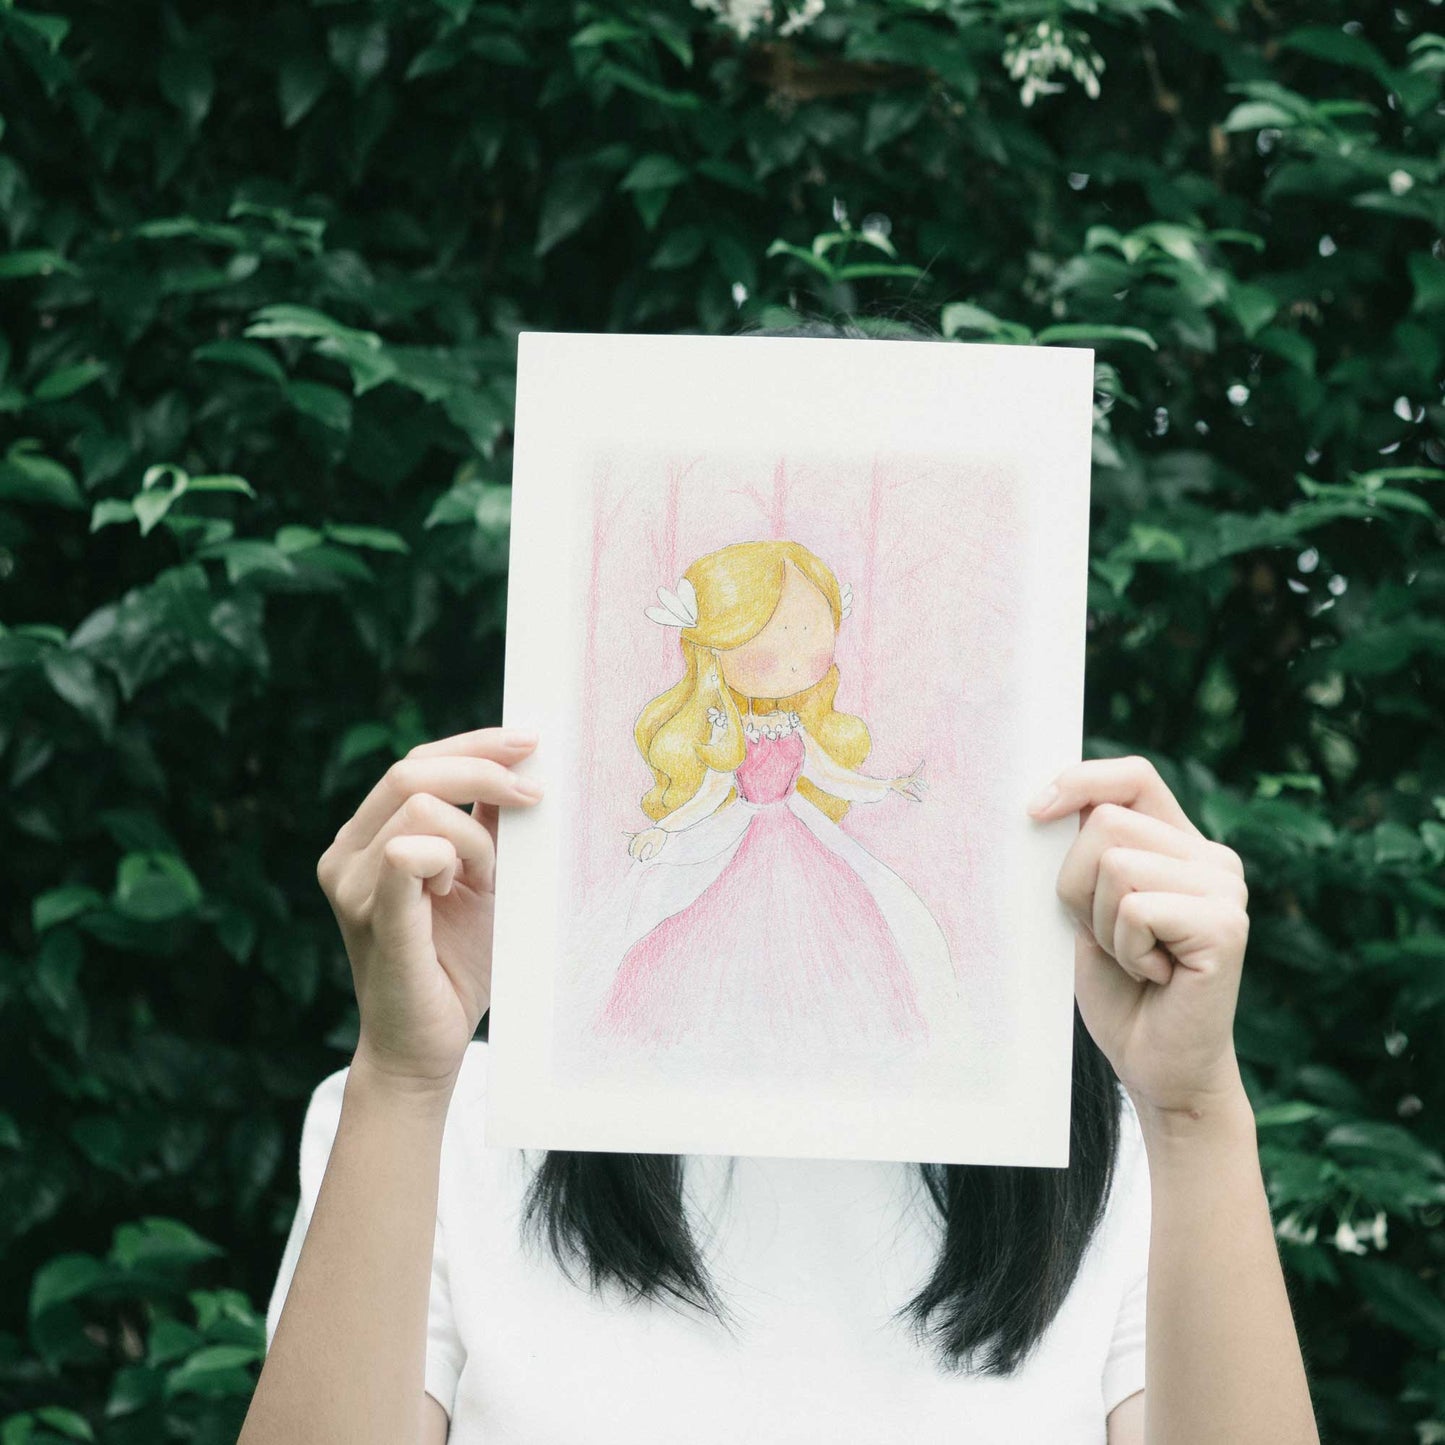 Affiche enfant - "La princesse rose"